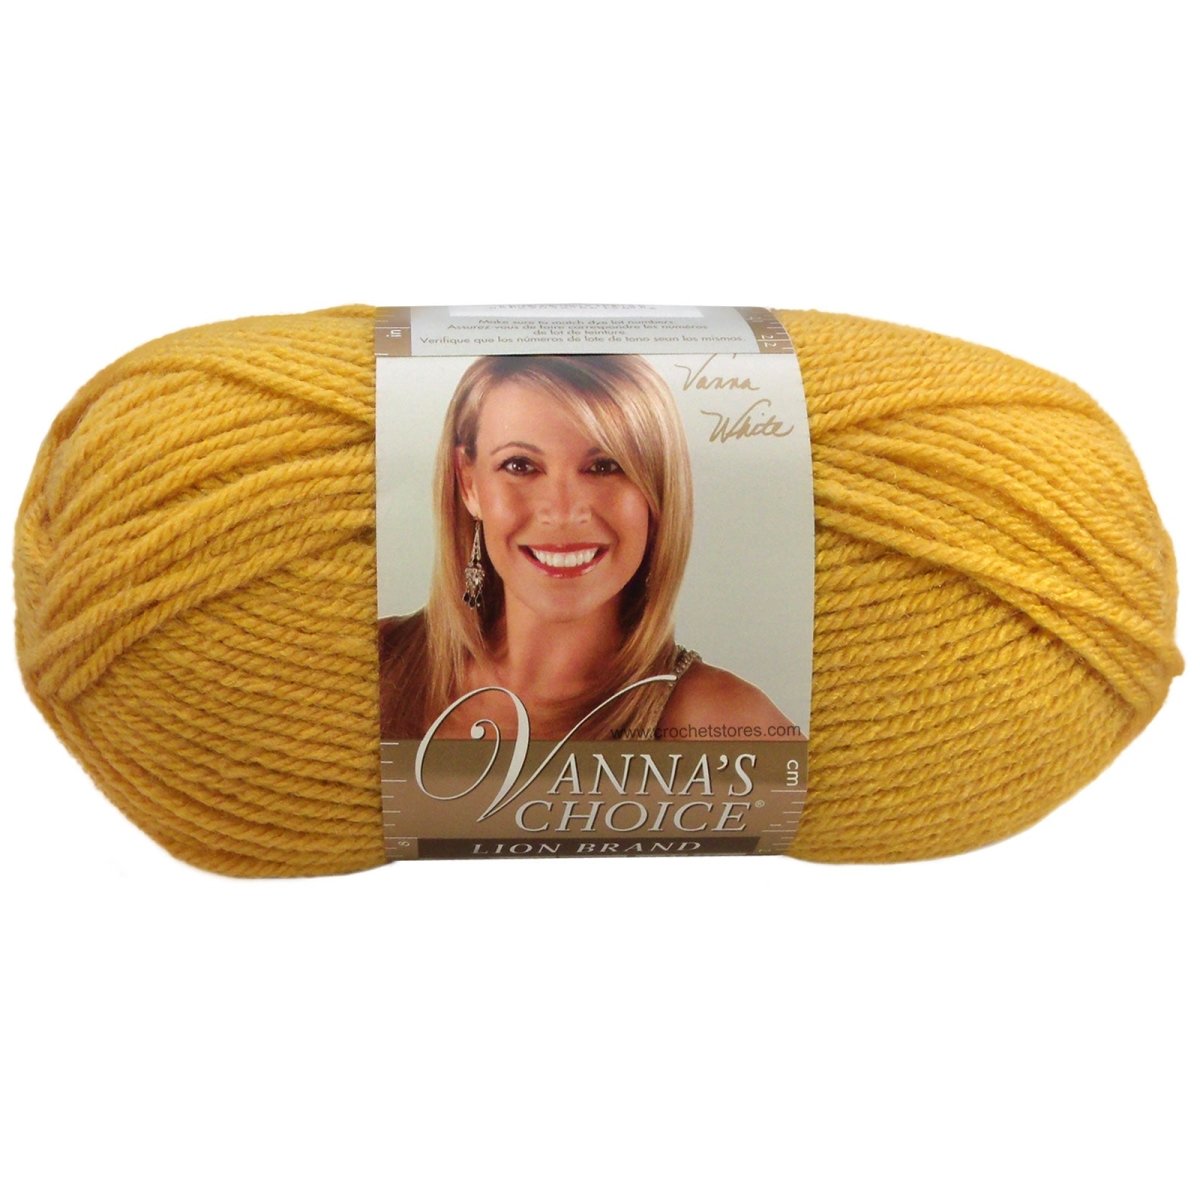 VANNAS CHOICE - Crochetstores860-158